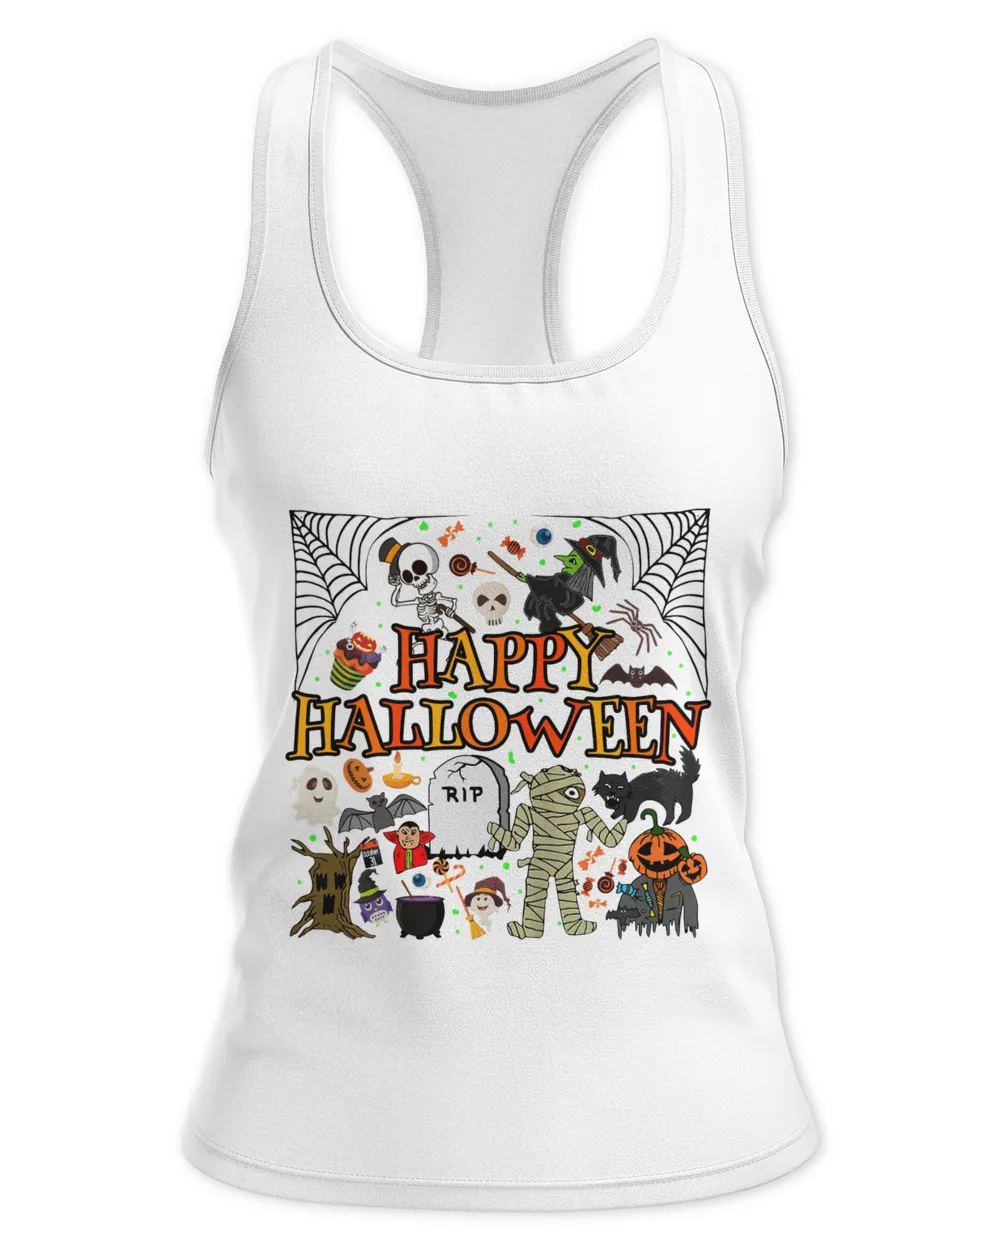 Happy Halloween Scary Retro V-Neck T-Shirt, black cat RIP pumpkin bat skeleton witches